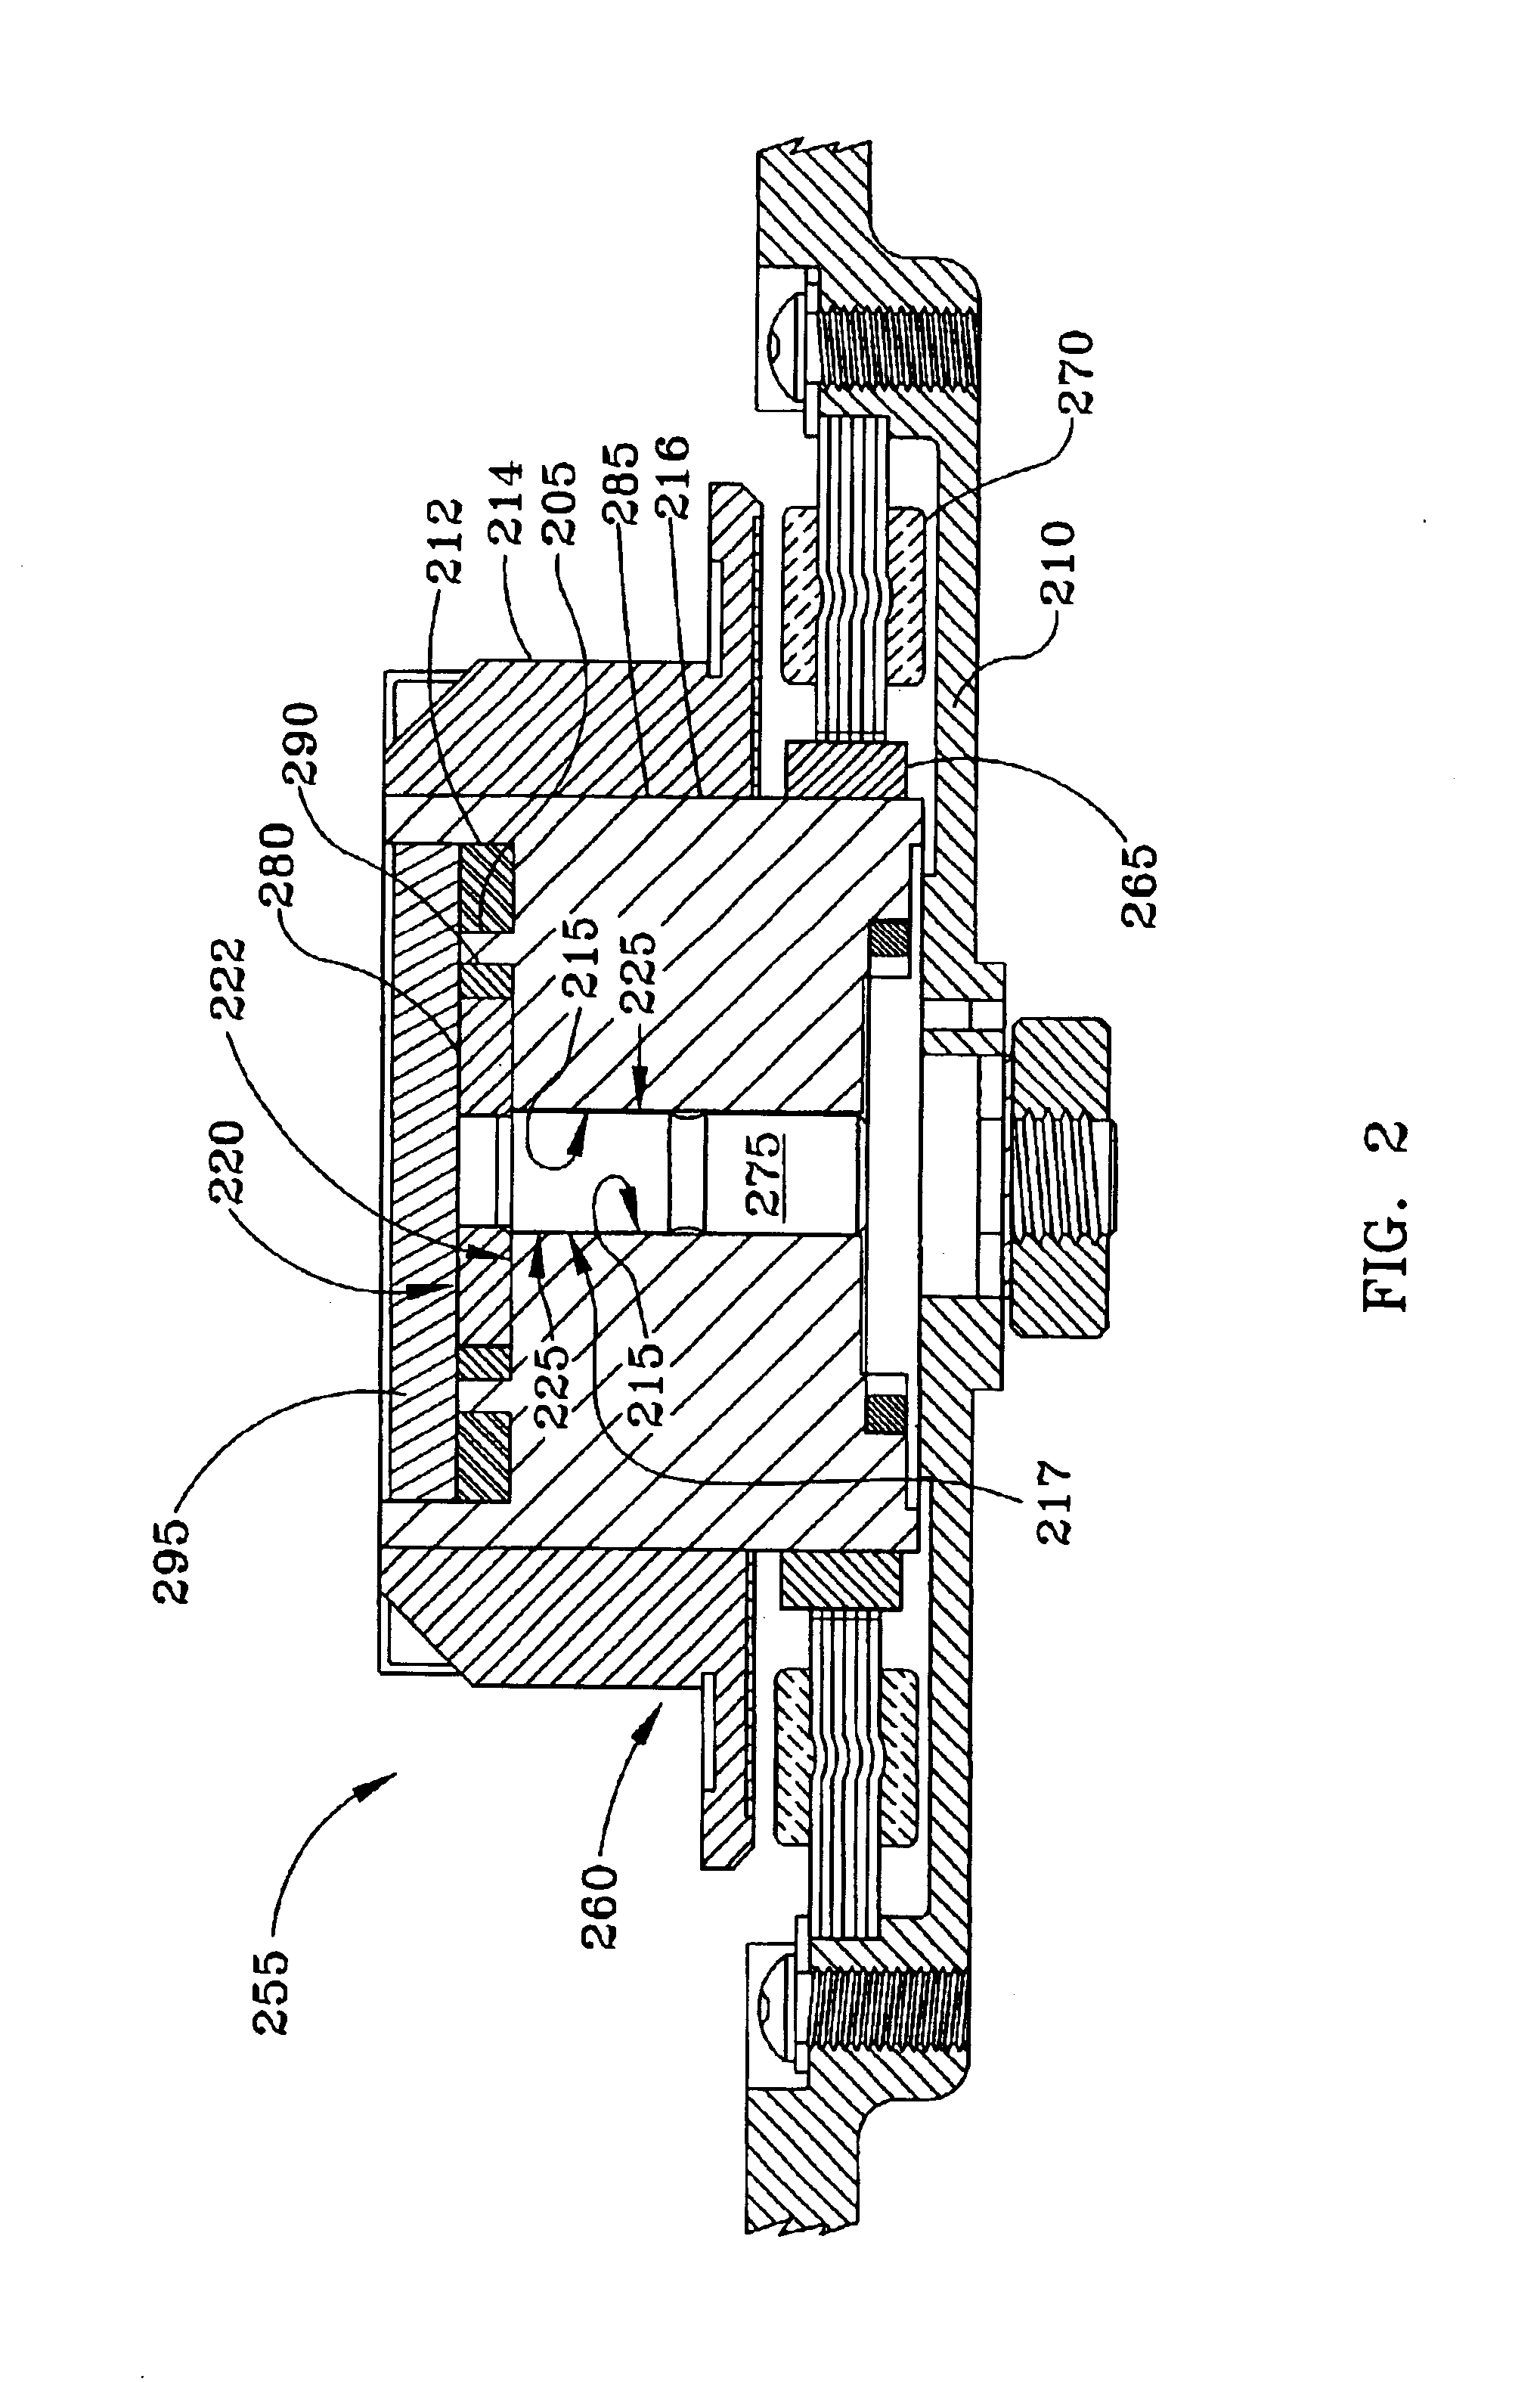 Refinement of spindle motor bearing gap